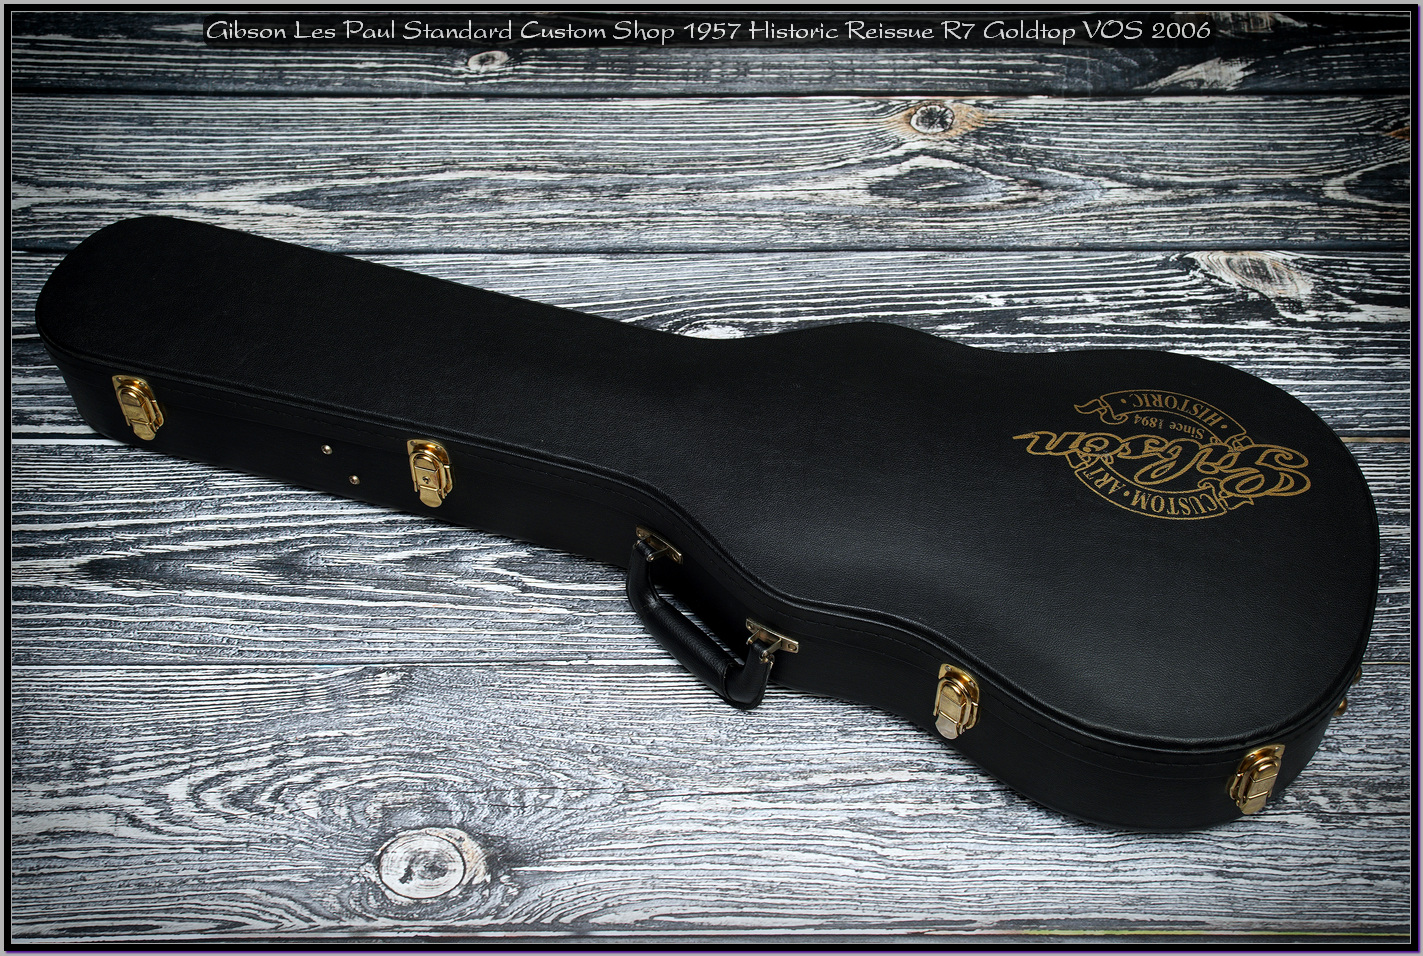 Gibson Les Paul Standard Custom Shop 1957 Historic Reissue R7 Goldtop VOS 2006 13_x1400.jpg